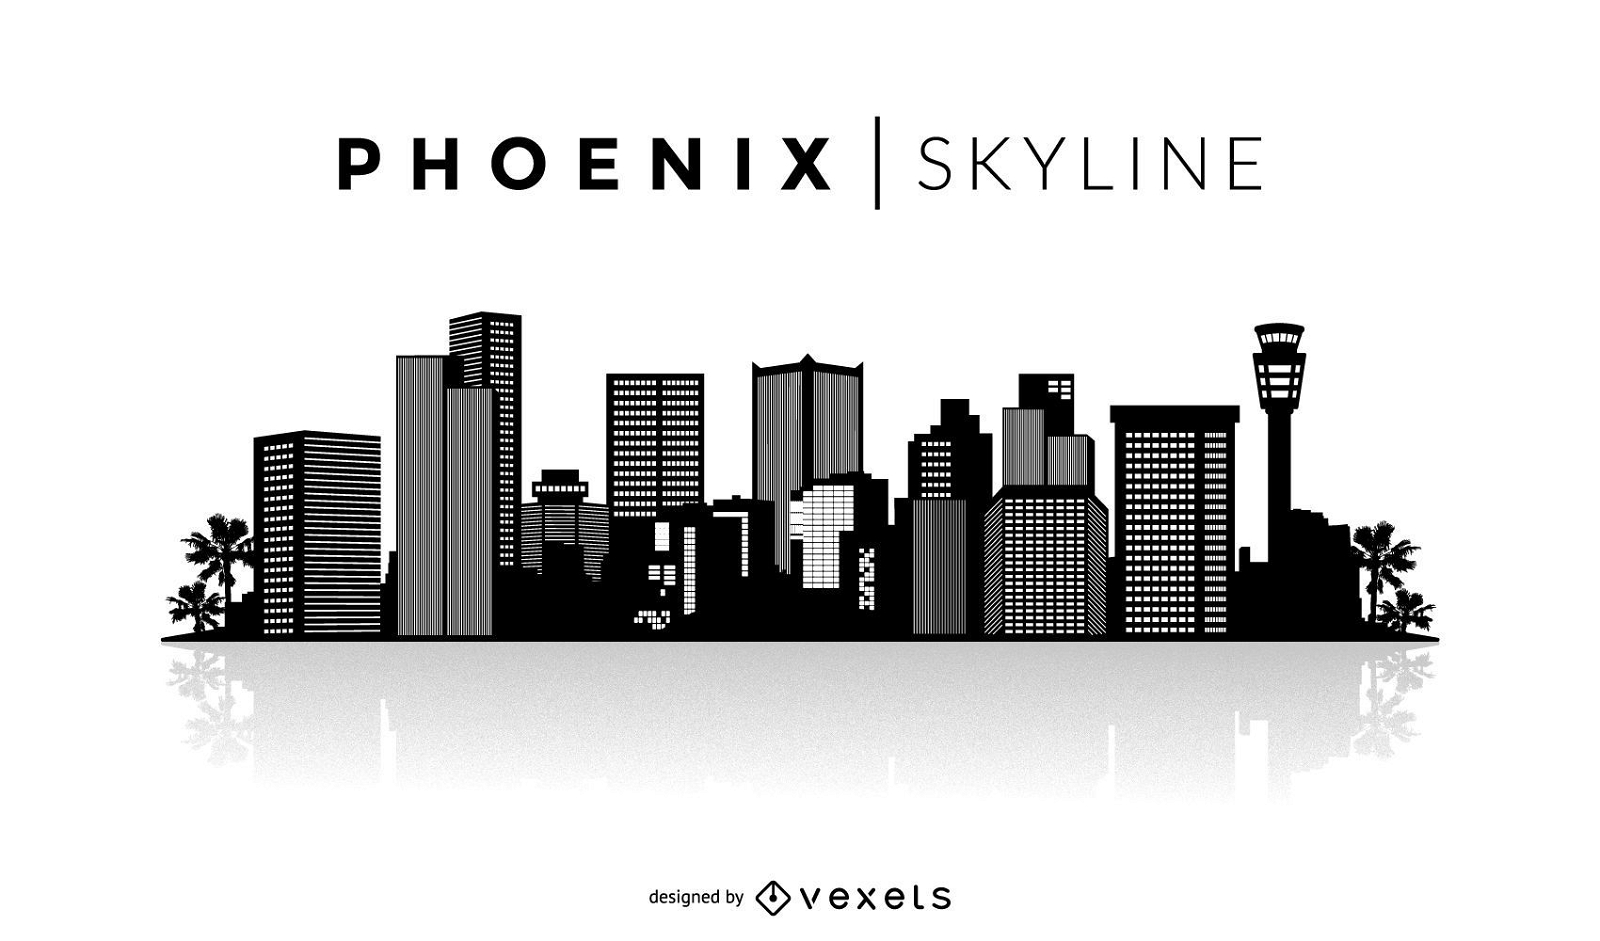 Phoenix skyline silhouette